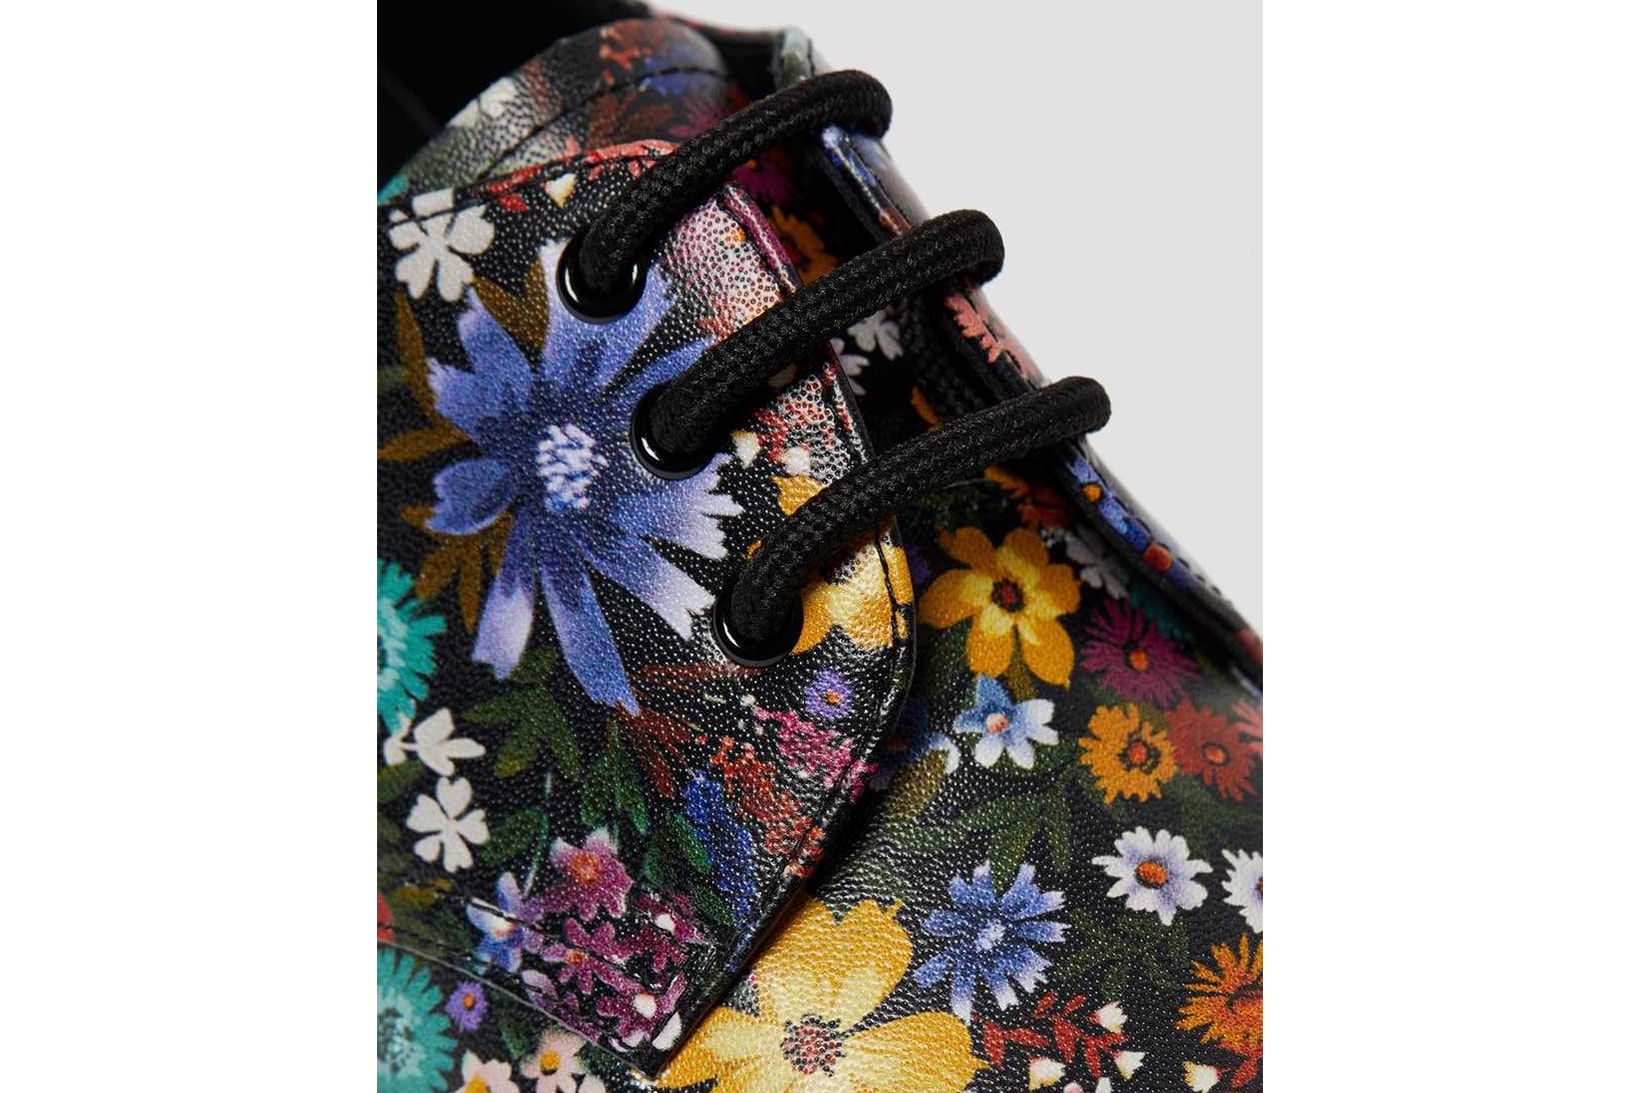 dr martens wanderlust pack 1460 floral lace up boots 1461 oxford shoes black footwear